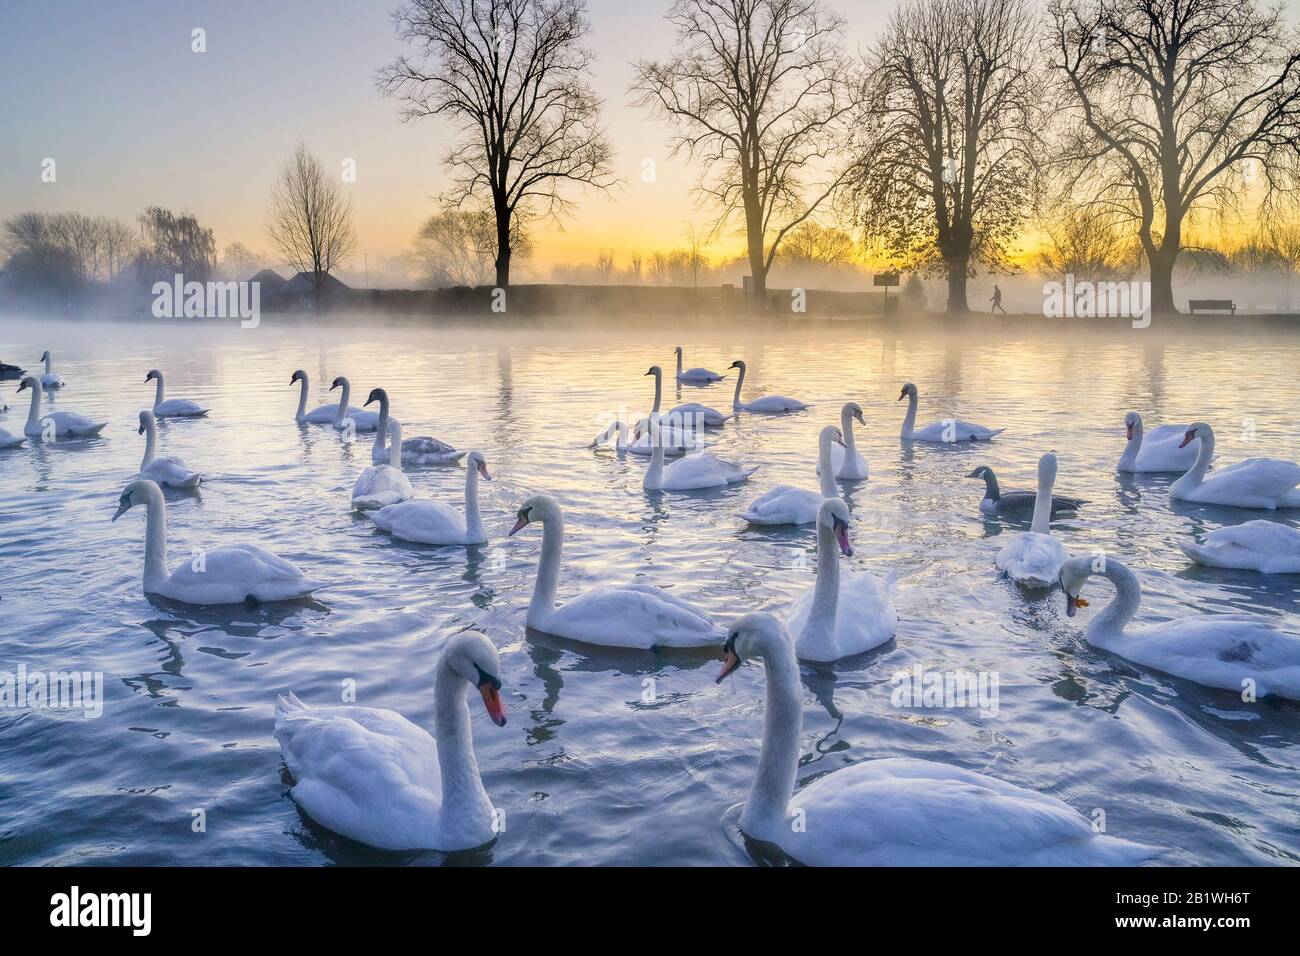 Mute swans, Avon River, Stratford upon Avon, Warwickshire, England, UK Stock Photo